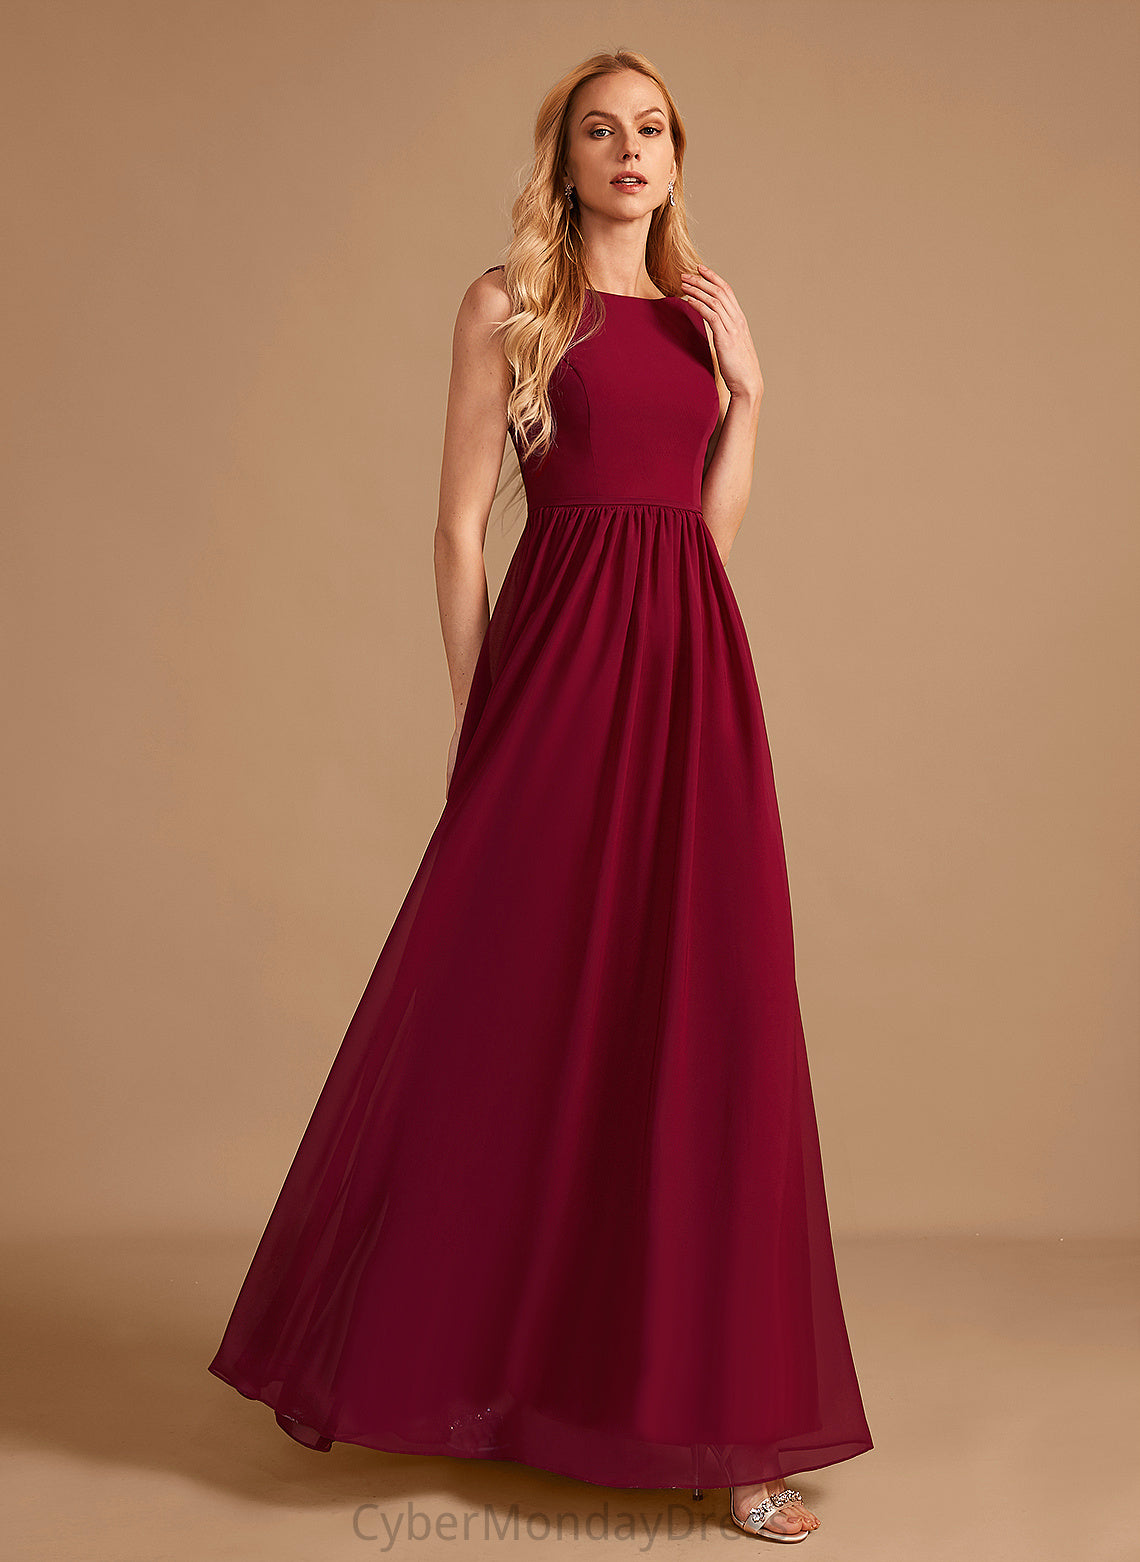 Silhouette HighNeck Neckline Length Floor-Length A-Line Embellishment Bow(s) Fabric Eliza Bridesmaid Dresses